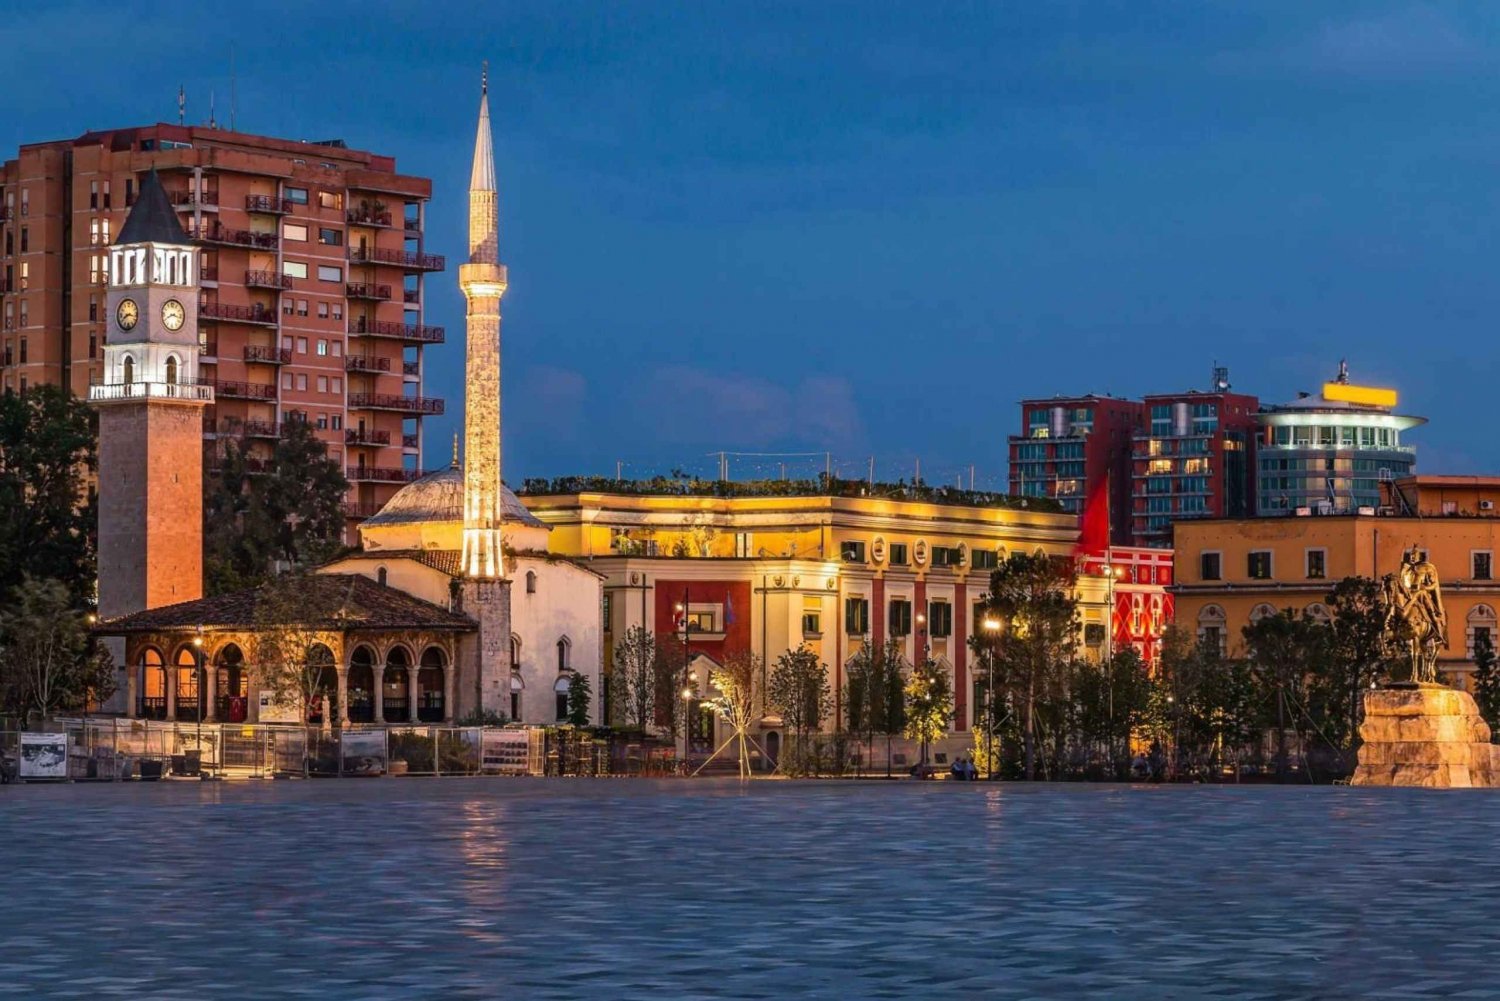 Tirana: Byliv og historisk sentrum